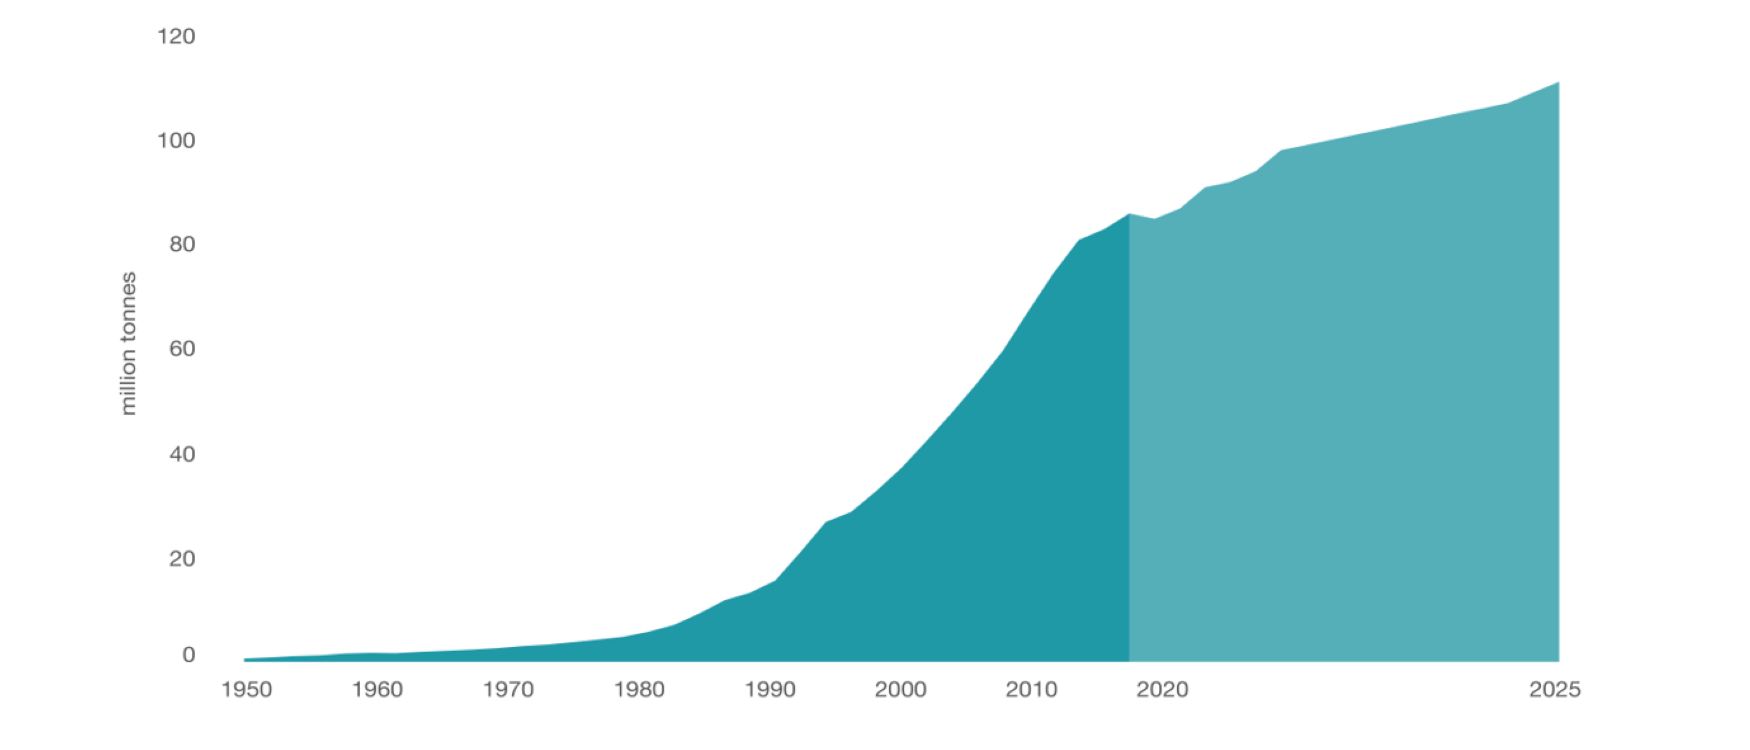 Estimated aquaculture production to 2025